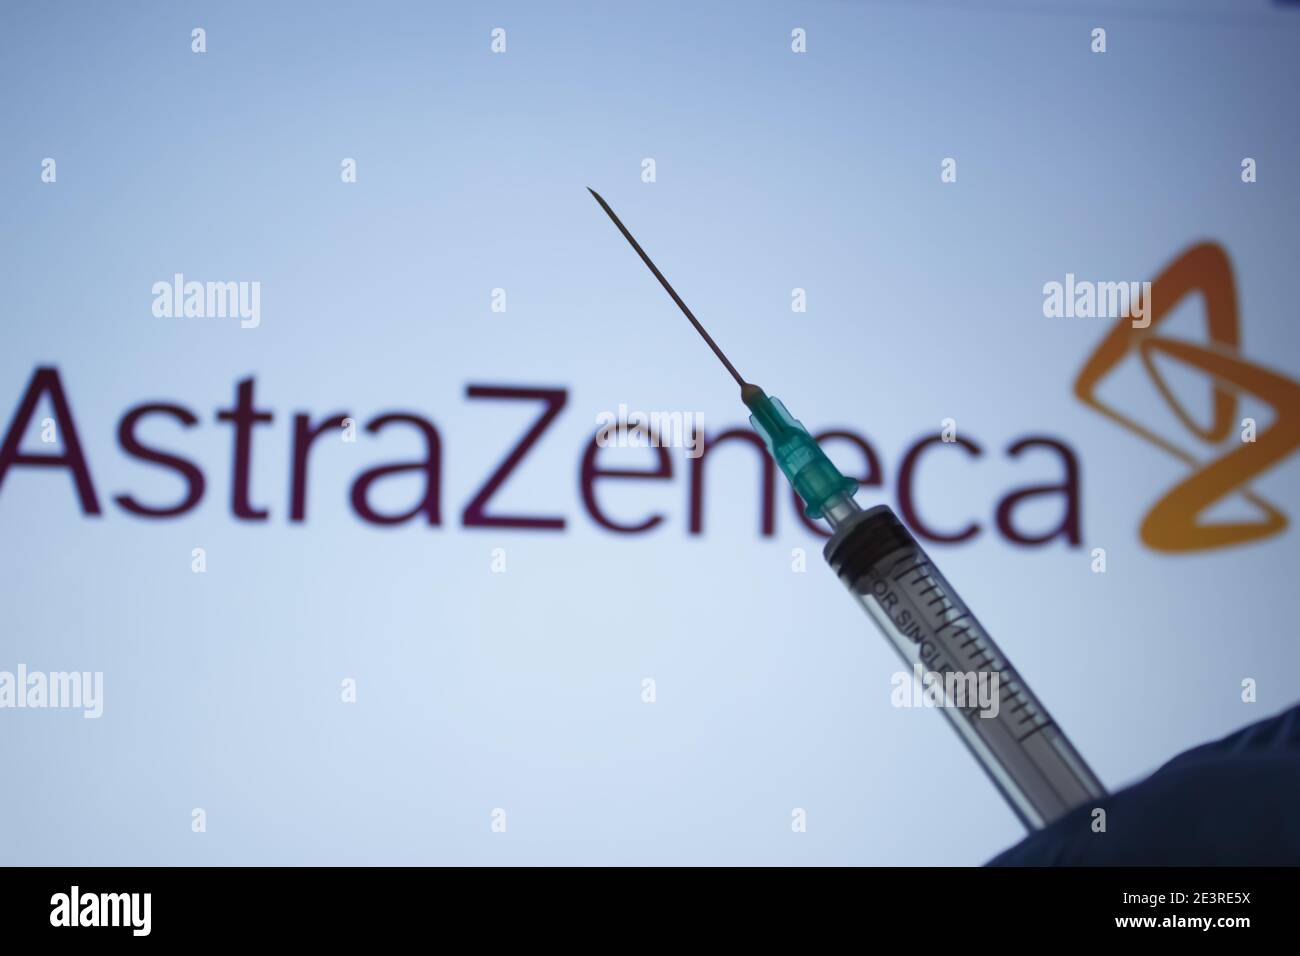 Covid-19 vaccine concept. Syringe needle, Blurred AstraZeneca company logo on the background. Coronavirus vaccination concept. Stock Photo